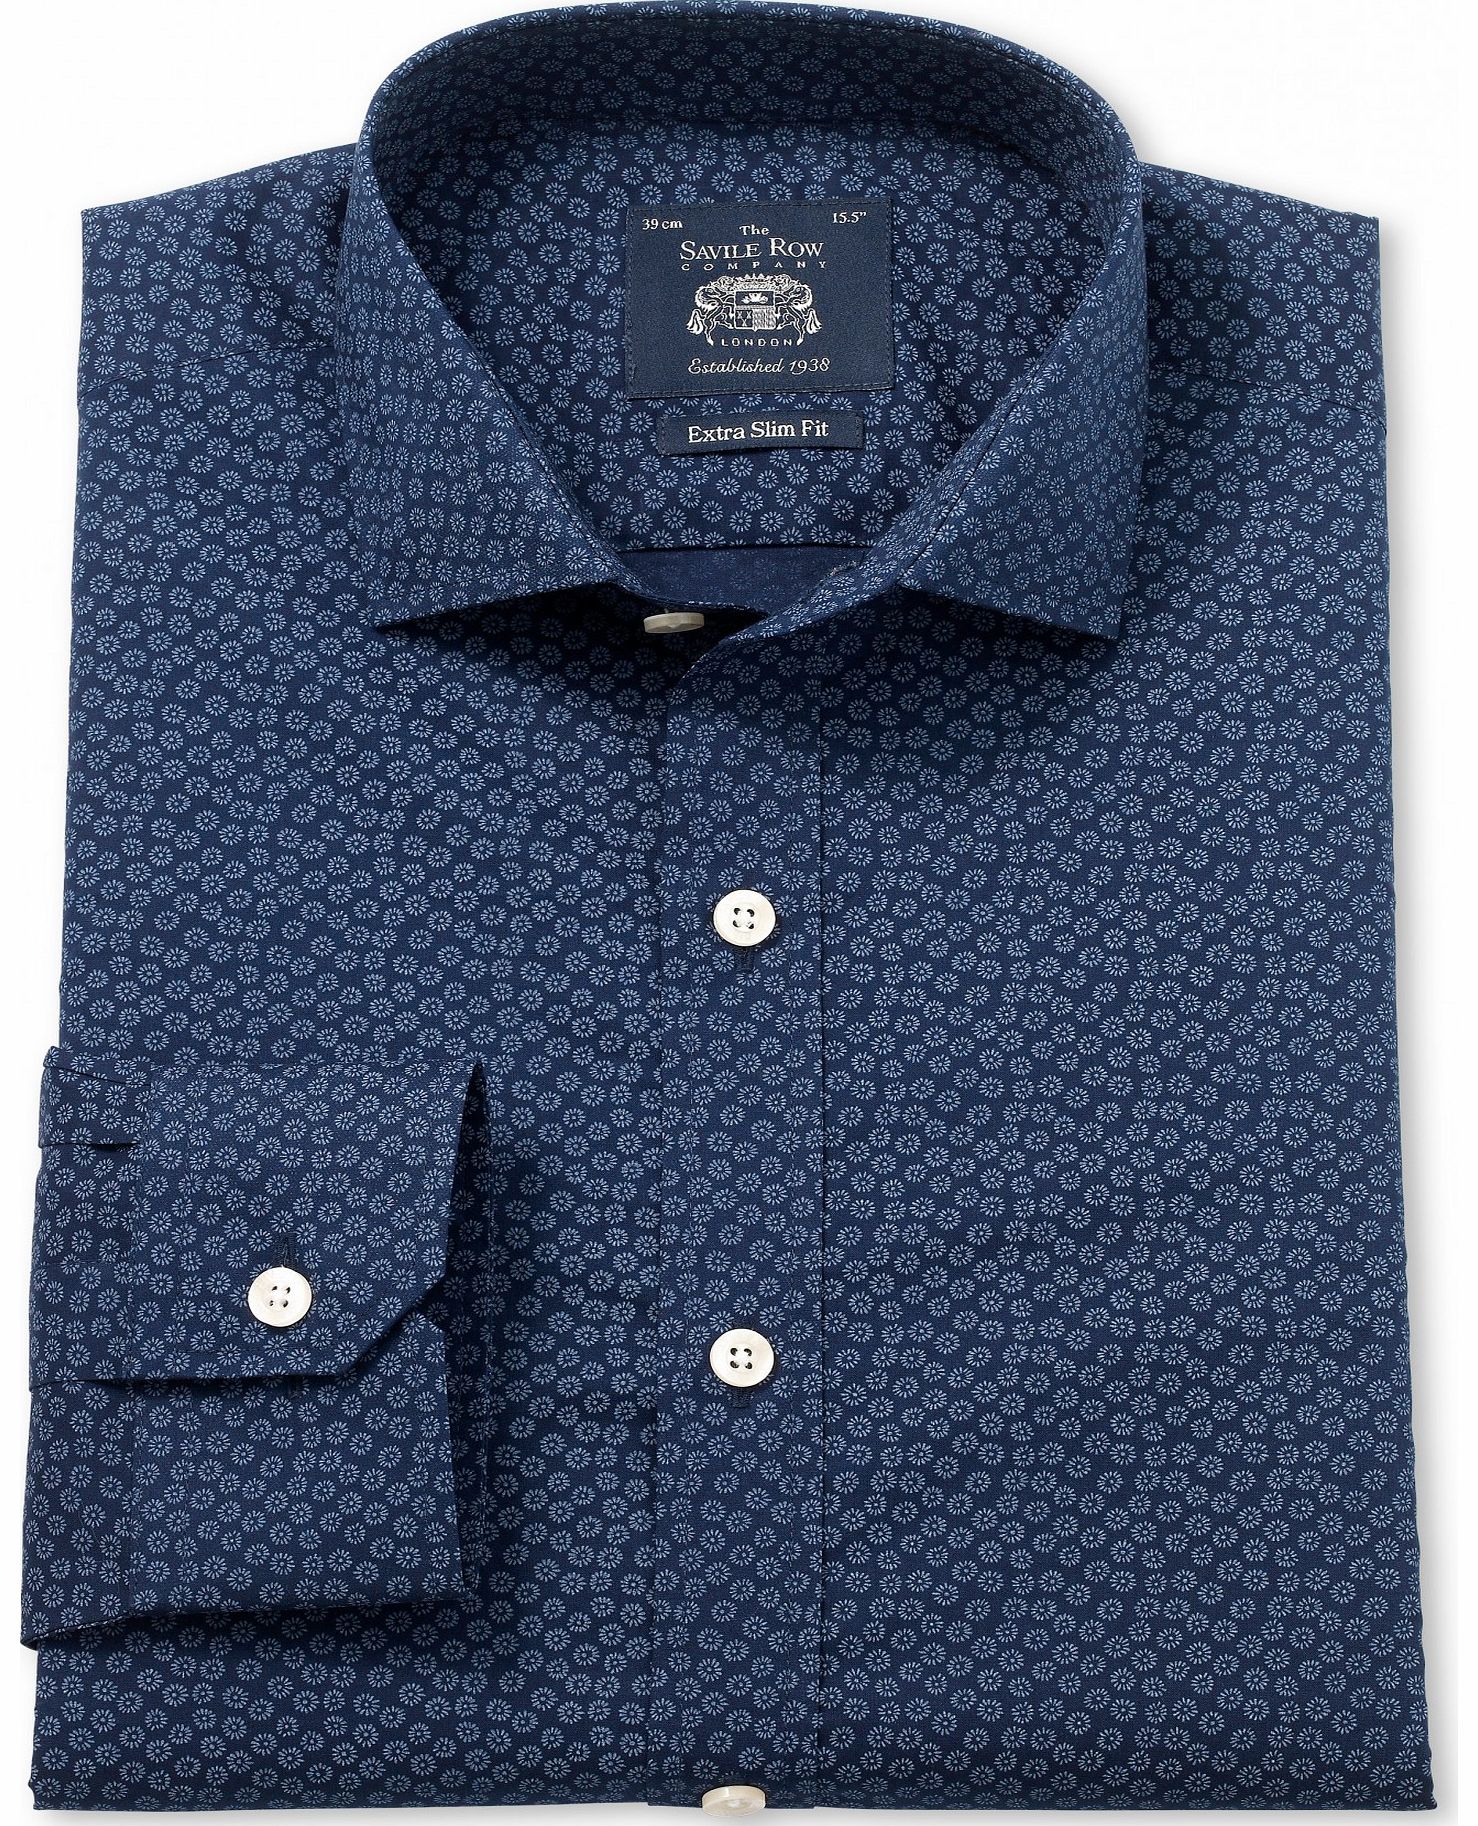 Navy Blue Printed Extra Slim Fit Shirt 14 1/2``